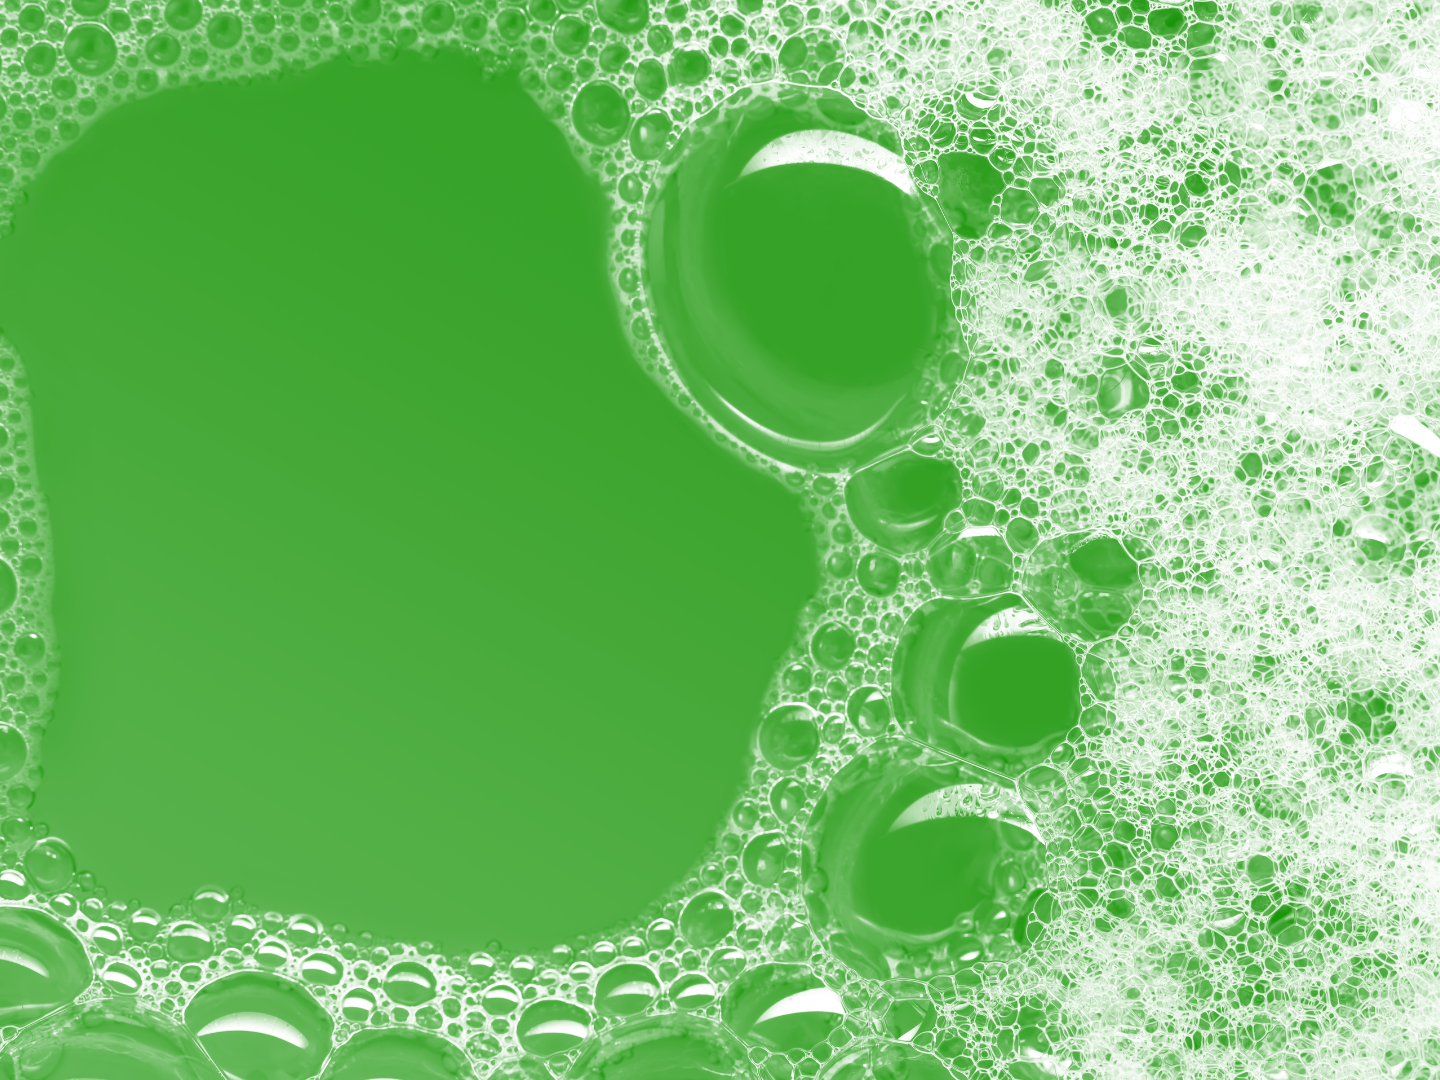 grønnvasking, såpebobler på grønt vann